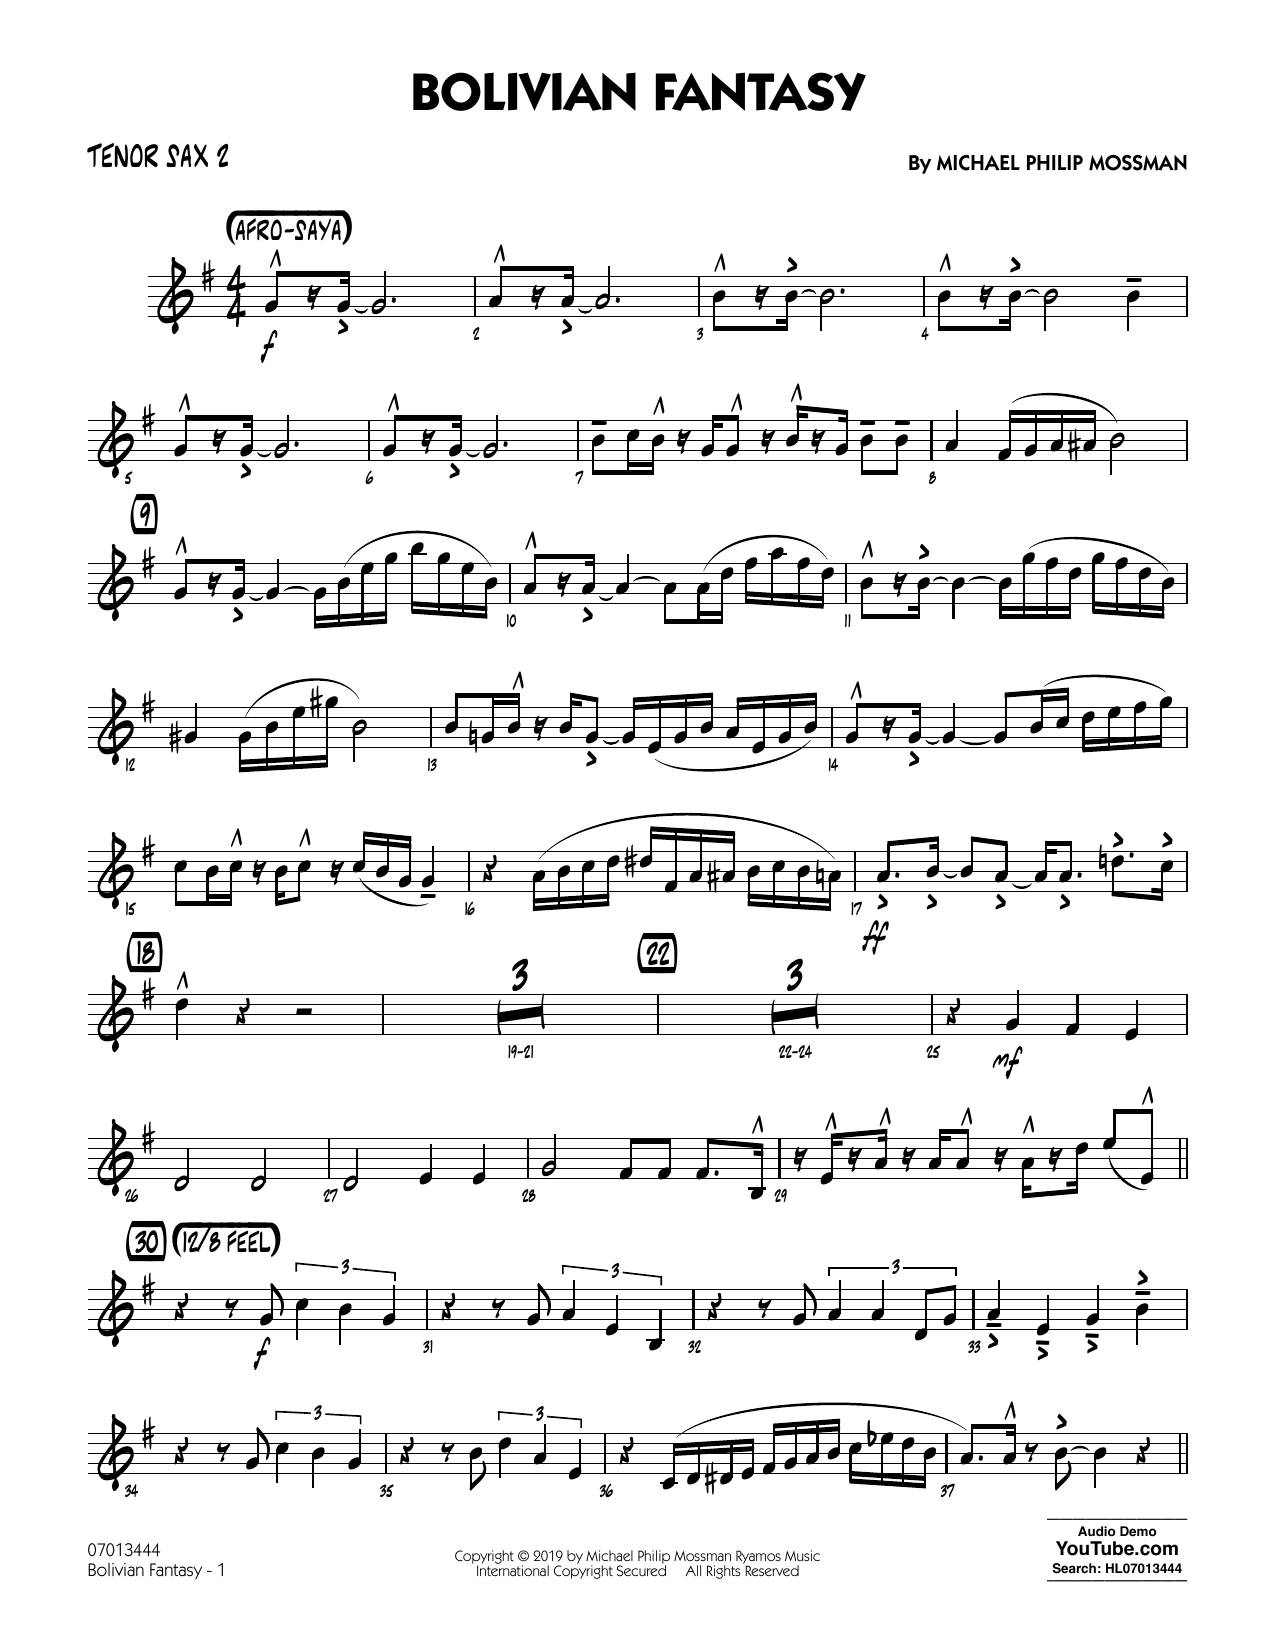 Michael Philip Mossman Bolivian Fantasy - Tenor Sax 2 Sheet Music Notes & Chords for Jazz Ensemble - Download or Print PDF